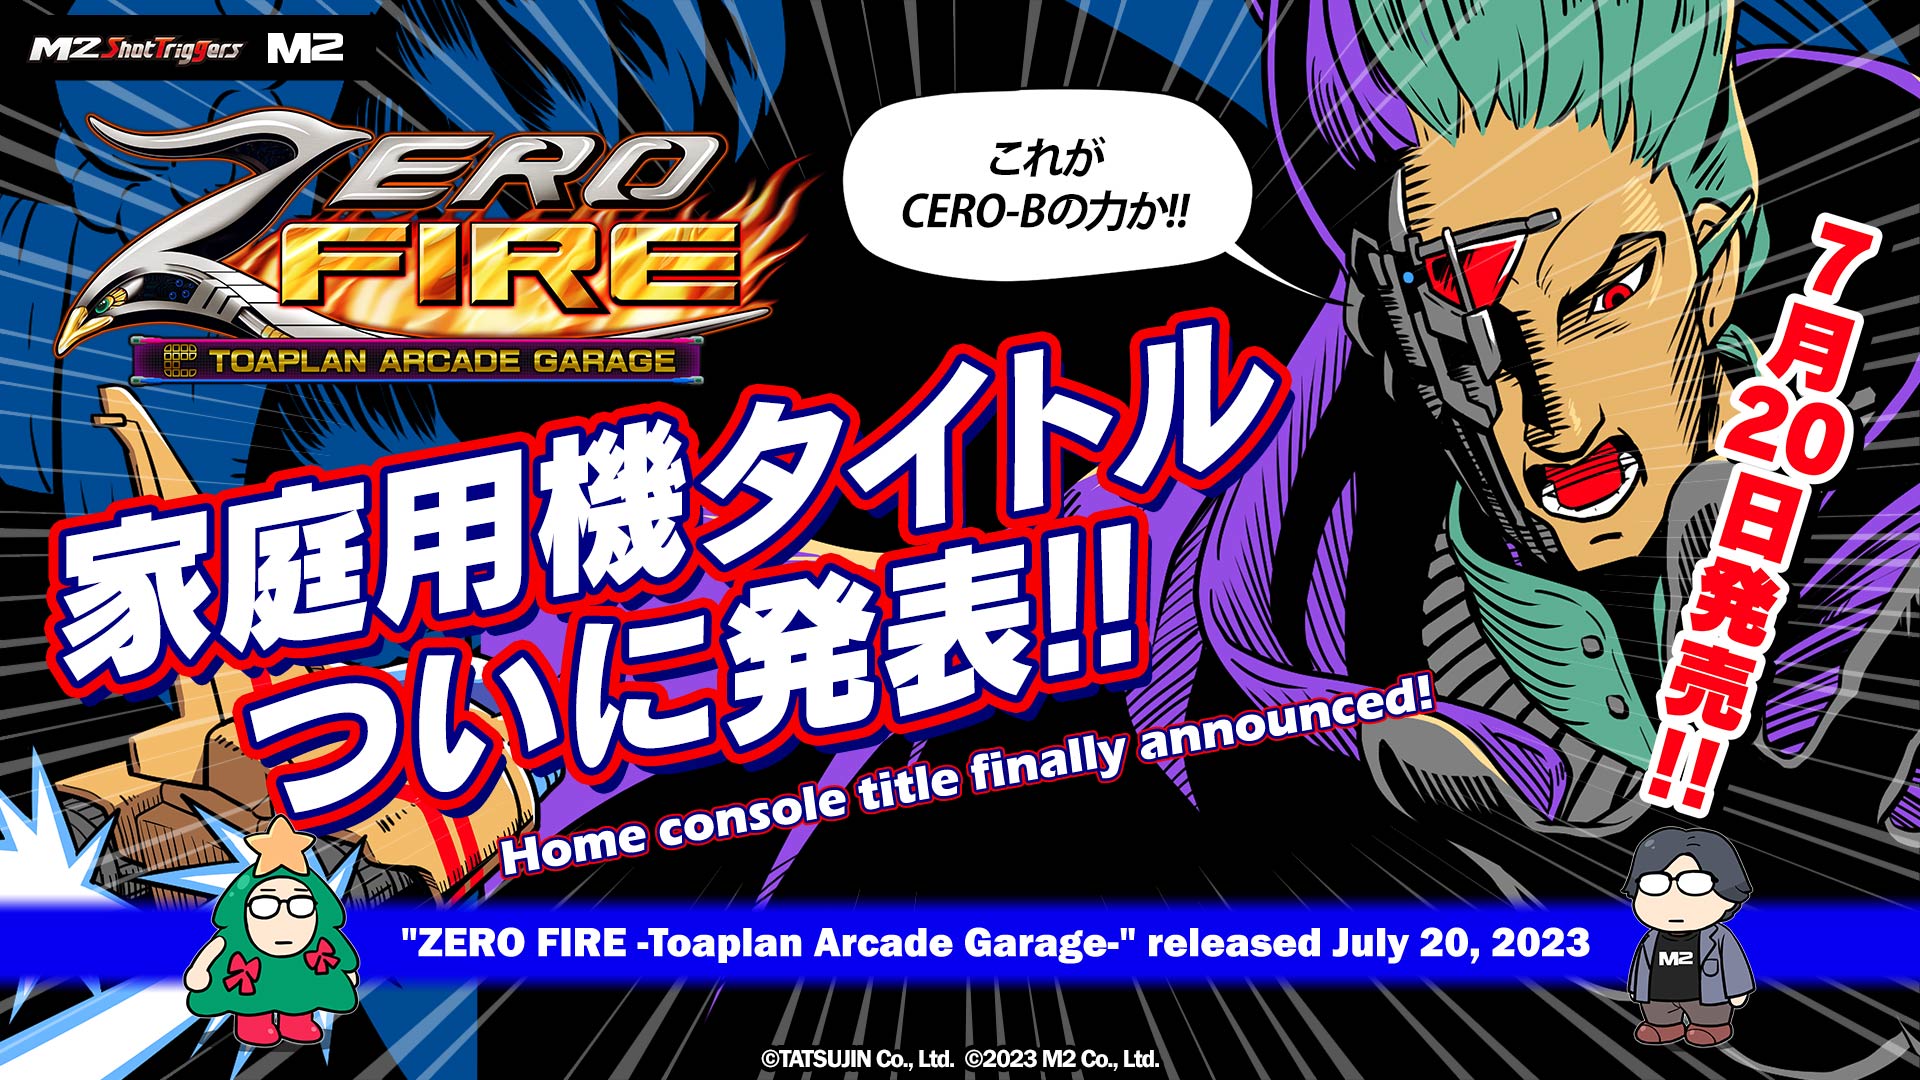 ZERO FIRE - Toaplan Arcade Garage - Home console title finally announced.